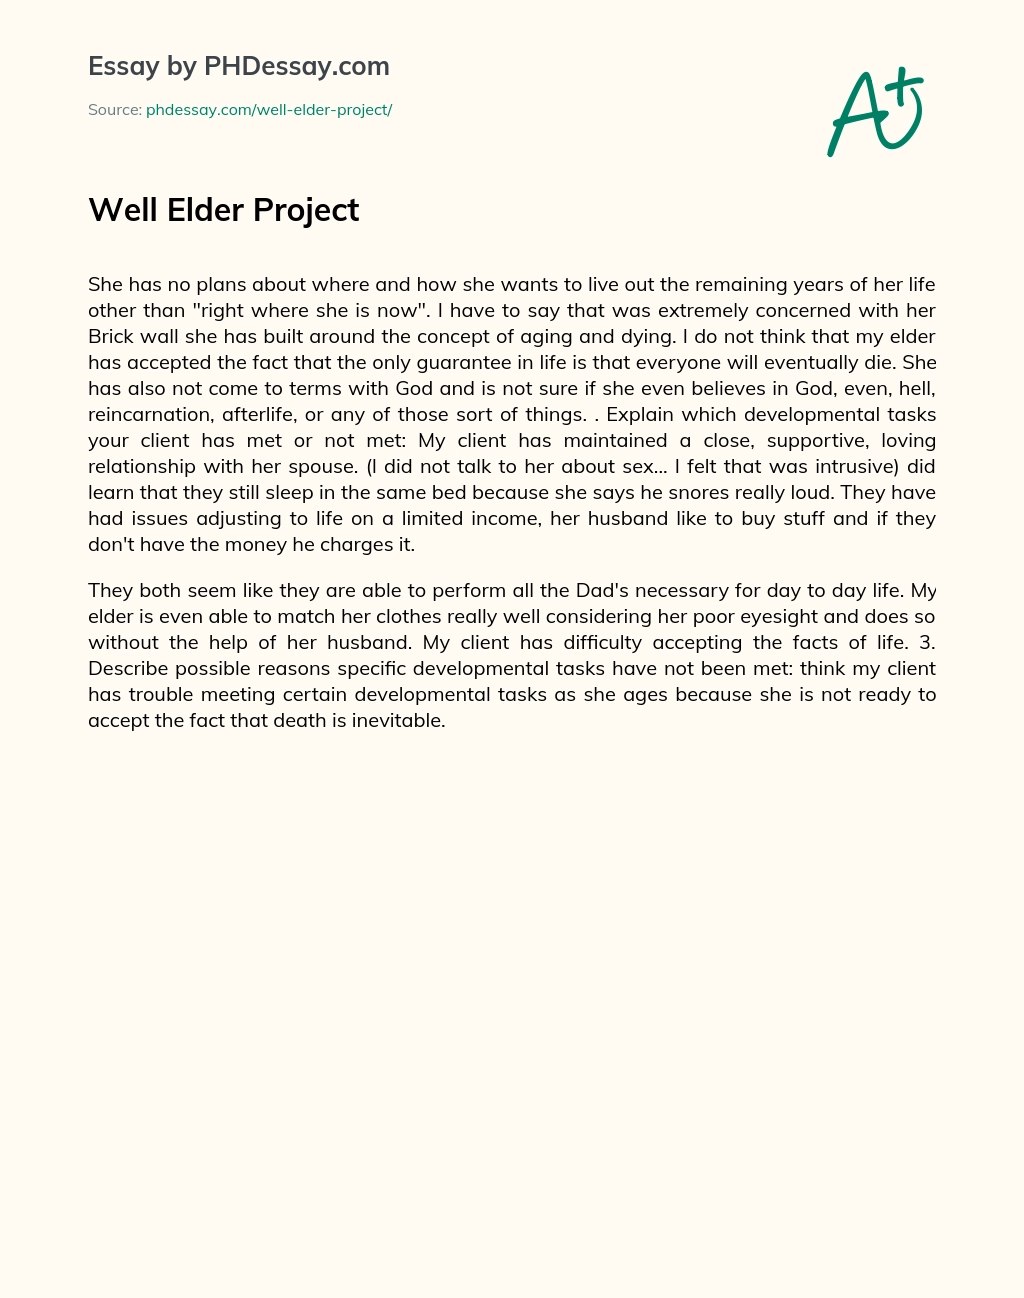 Well Elder Project essay